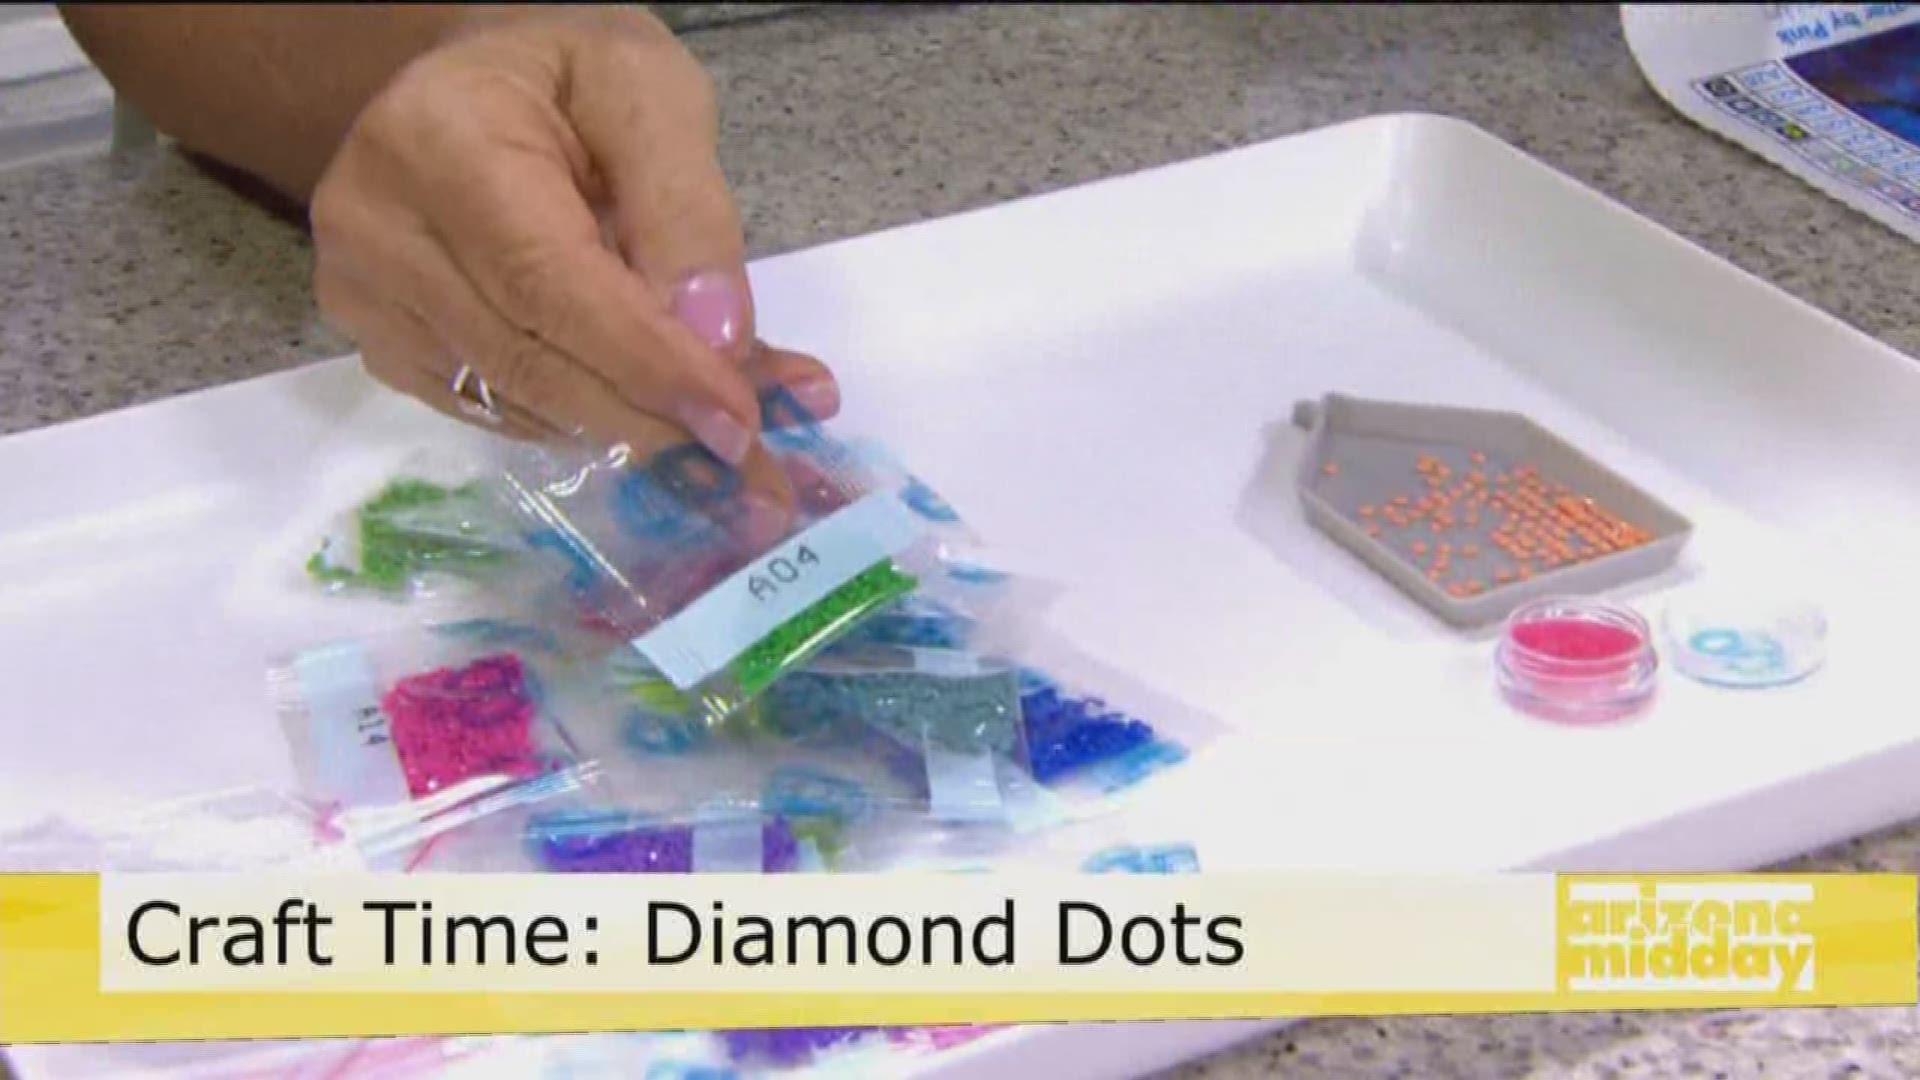 Jan demonstrates how to use Diamond Dotz to make beautiful artwork.